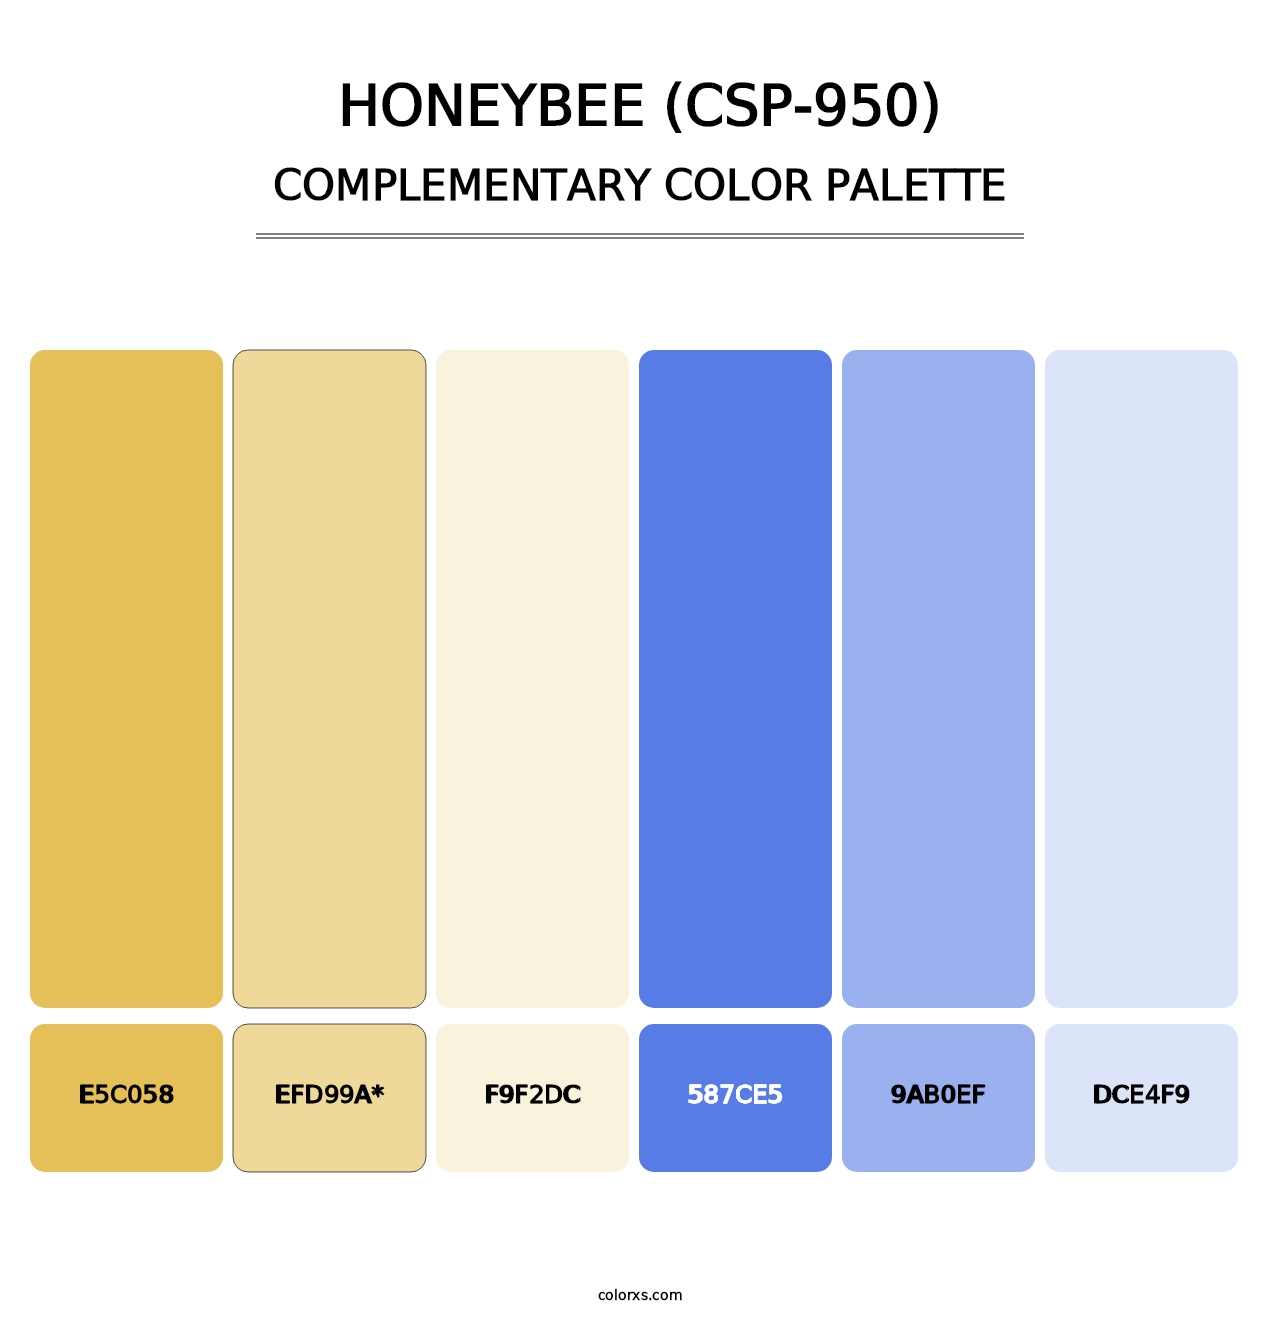 Honeybee (CSP-950) - Complementary Color Palette